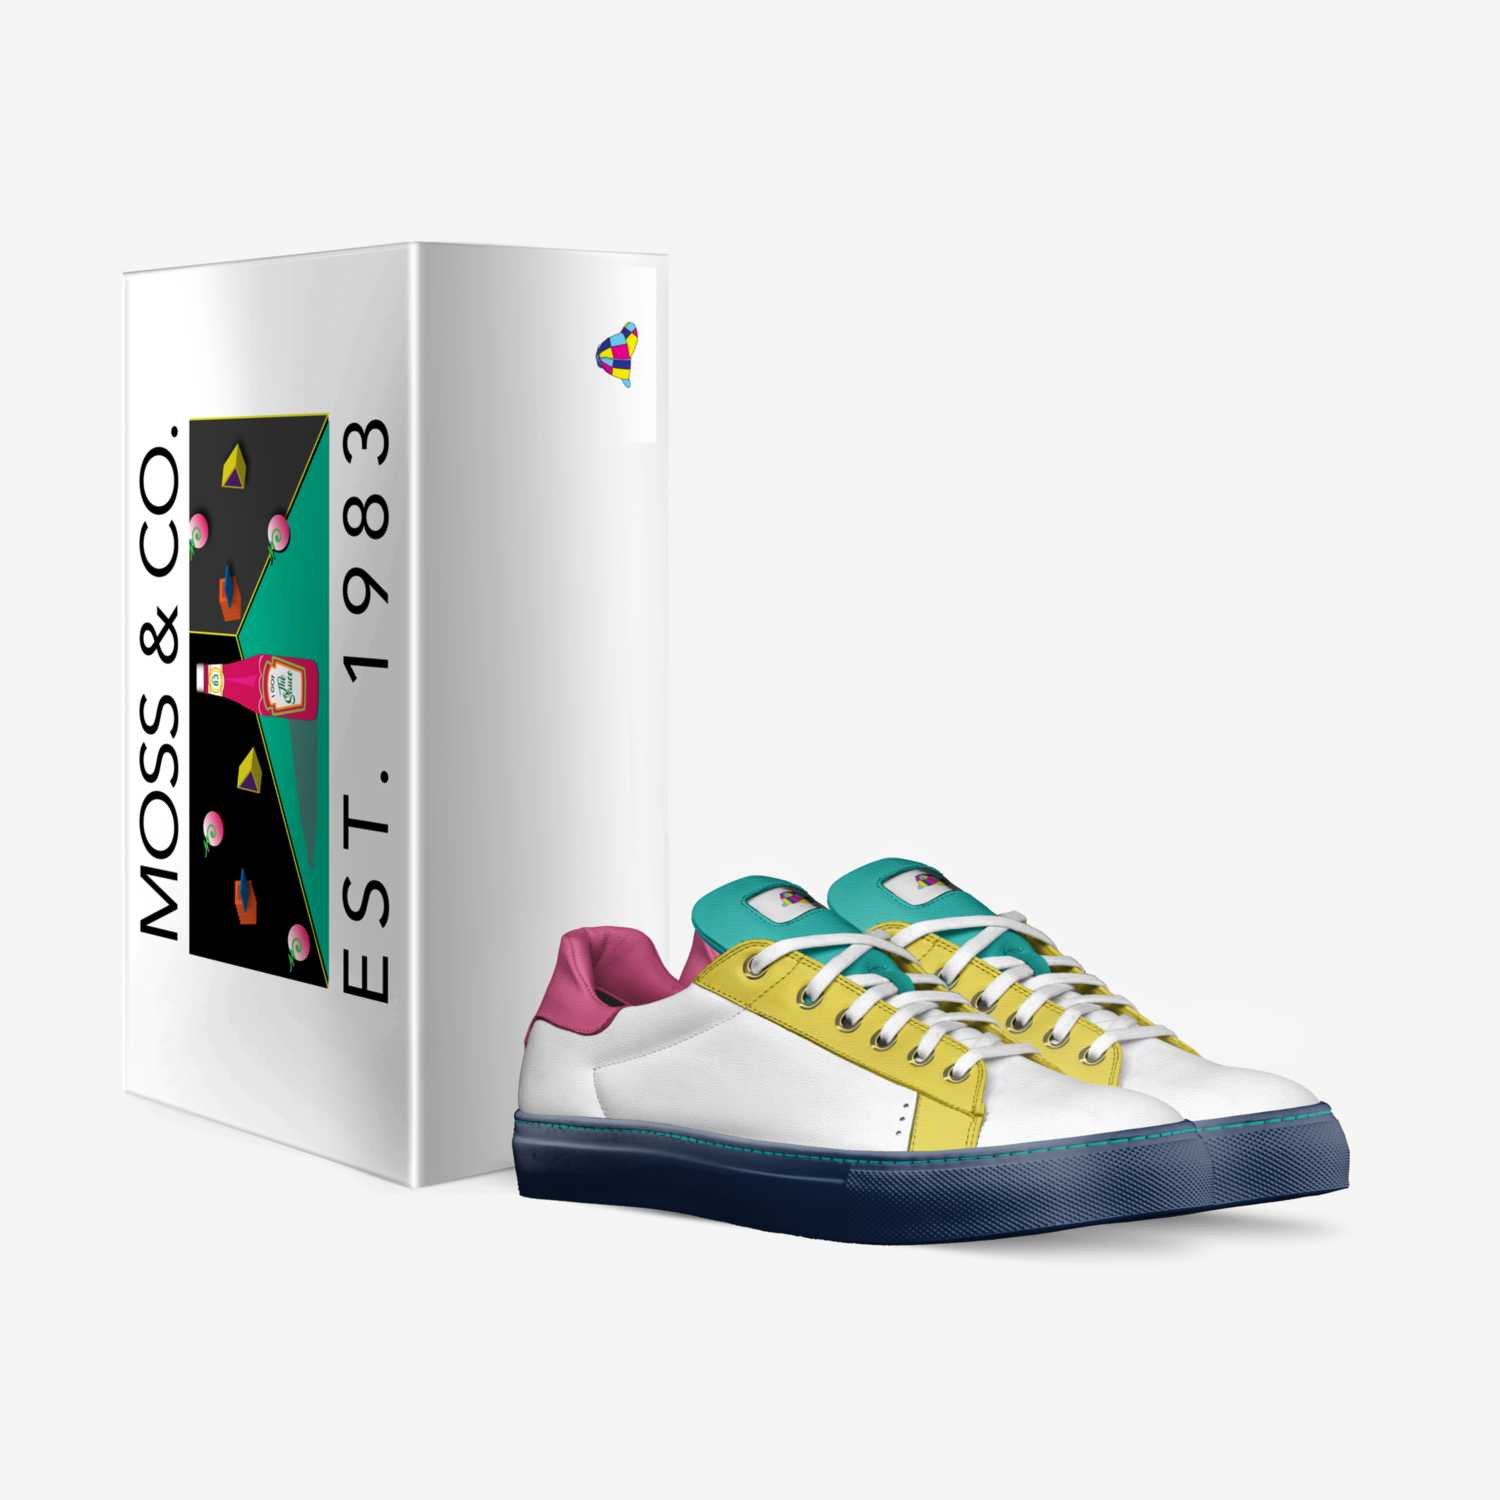 S A U X C Y custom made in Italy shoes by Huey Moss Ii | Box view